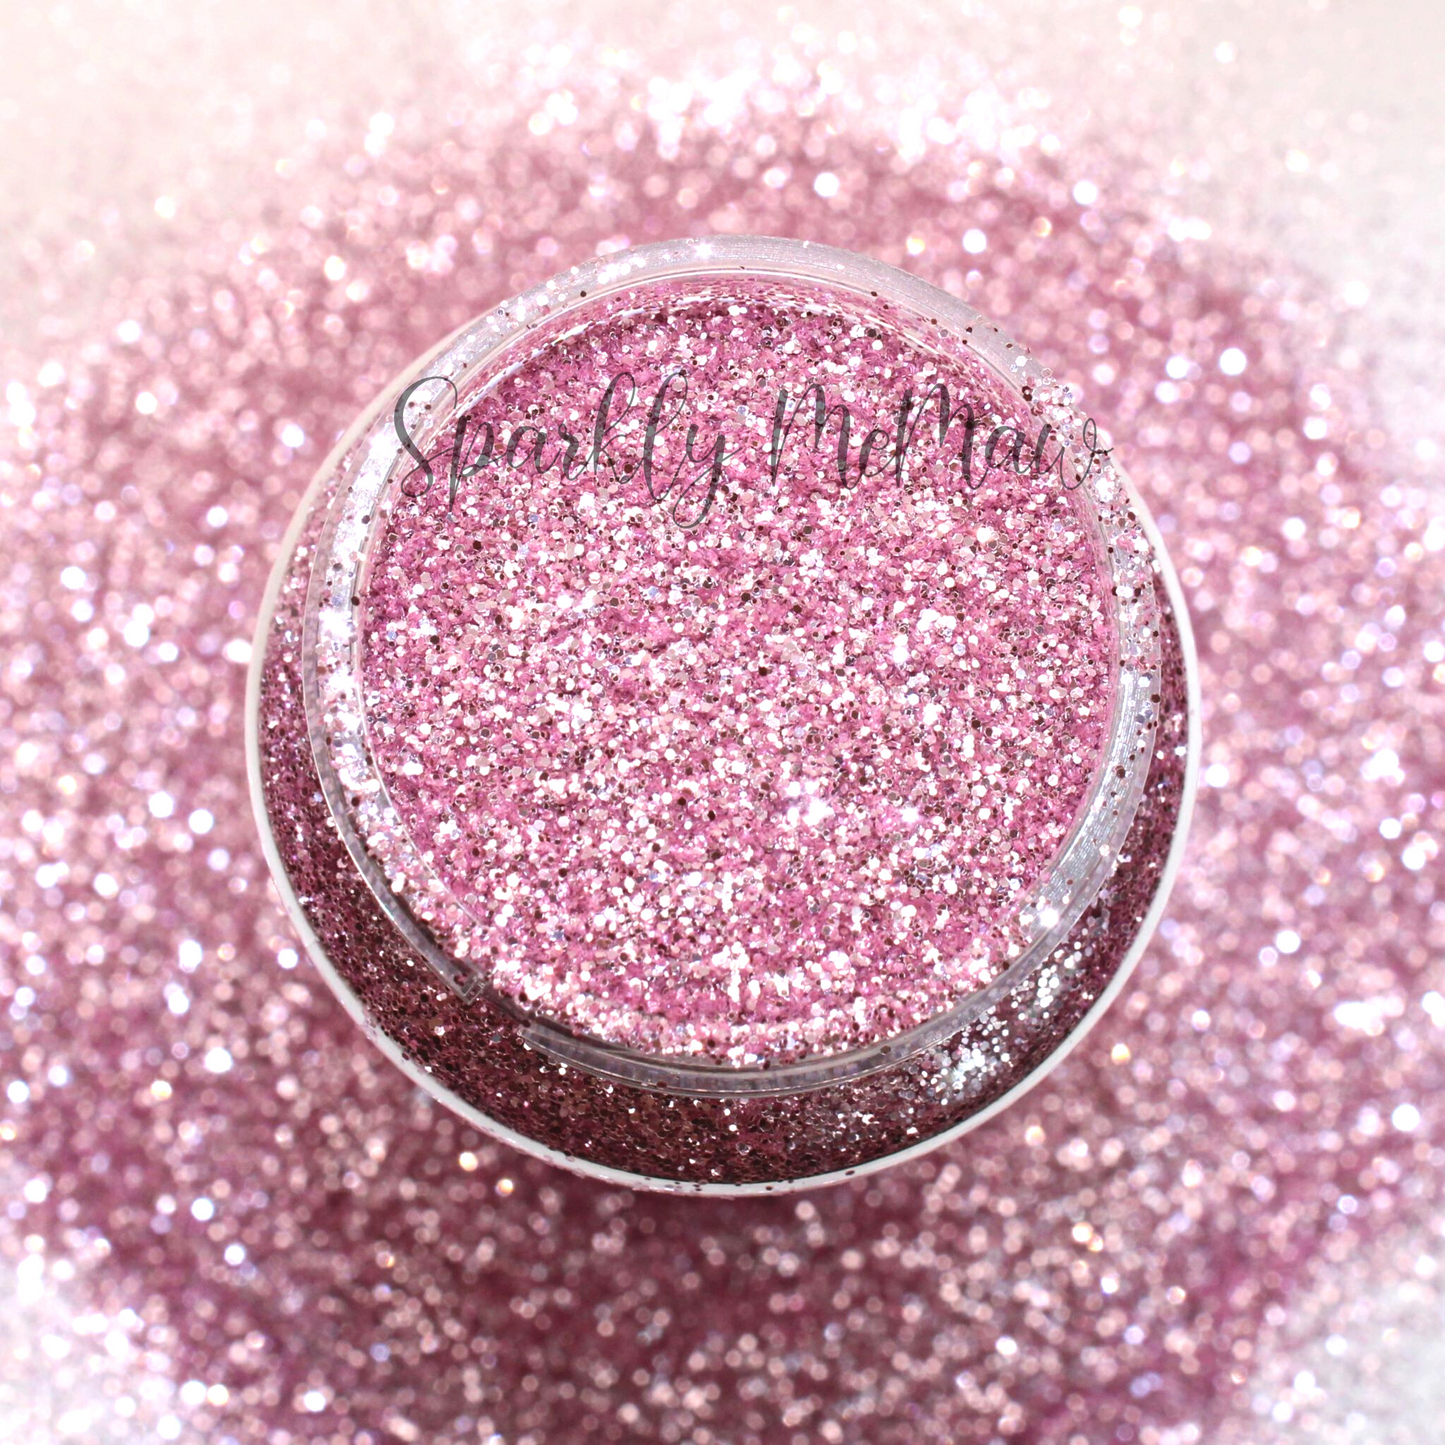 Delicate Pink Basic Fine Metallic Glitter Mix